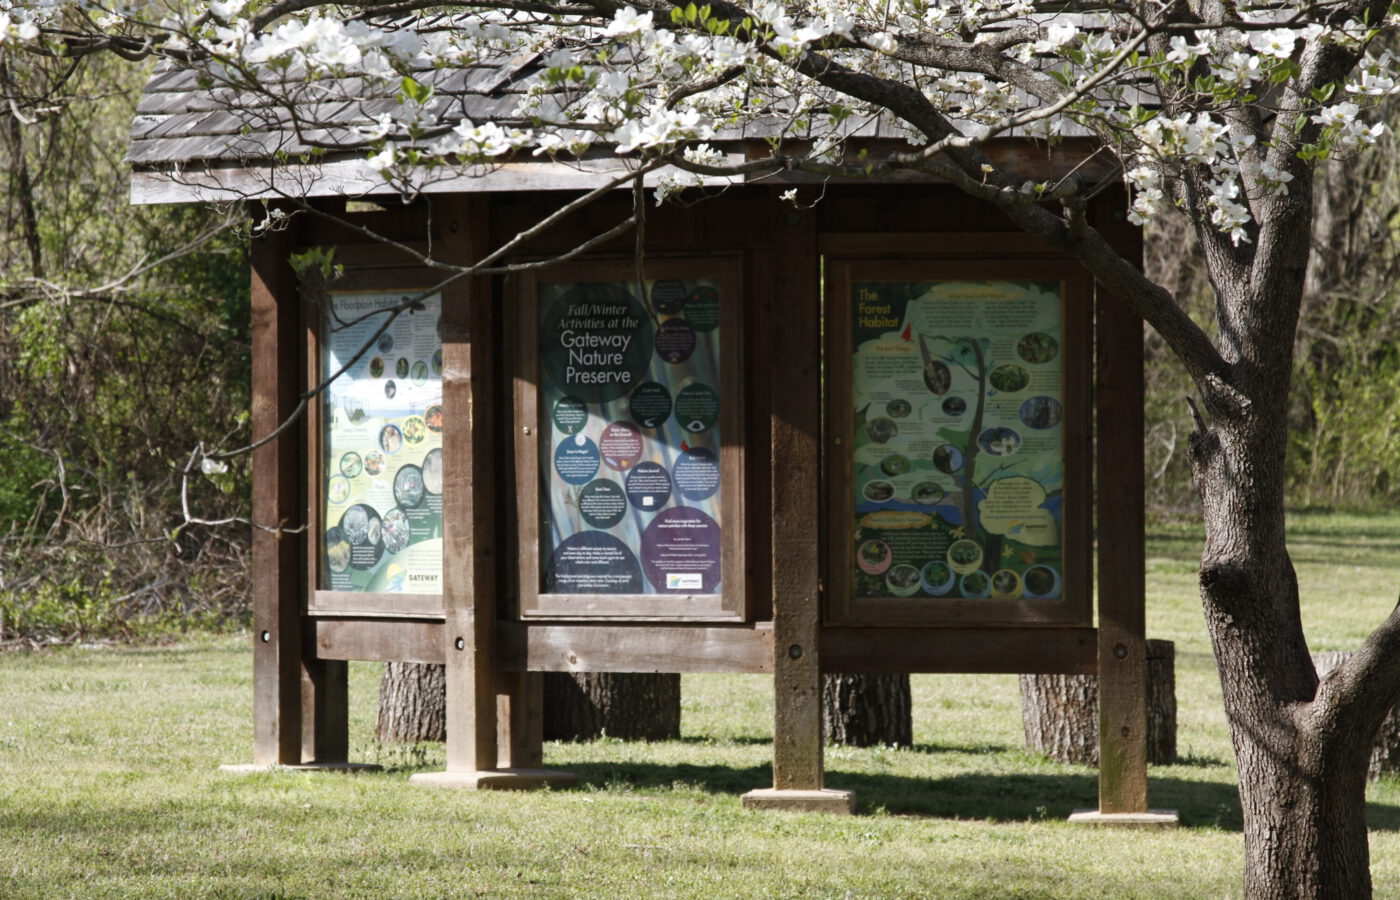 Informational kiosk at Gateway Nature Preserve